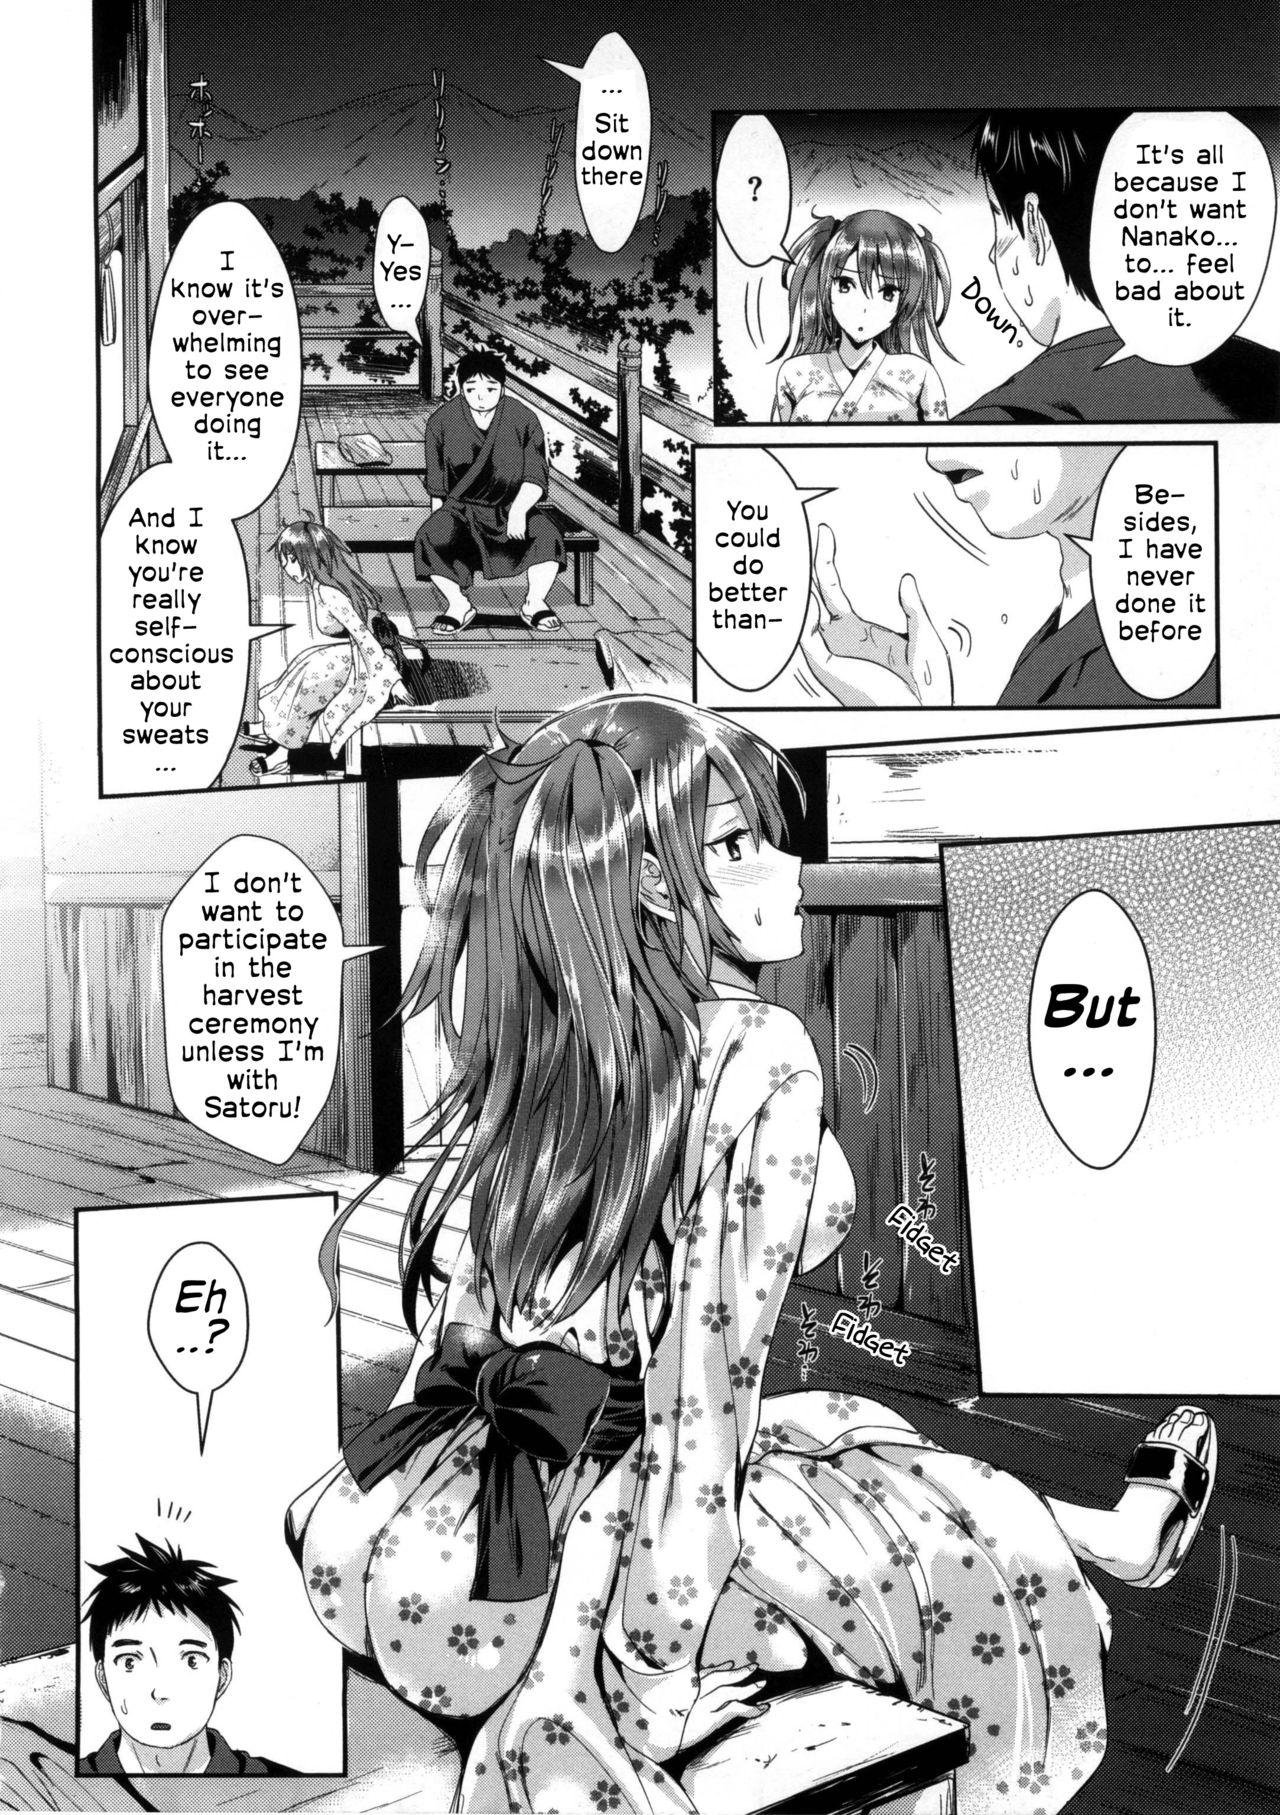 Dirty Nanako and Satoru Spain - Page 8